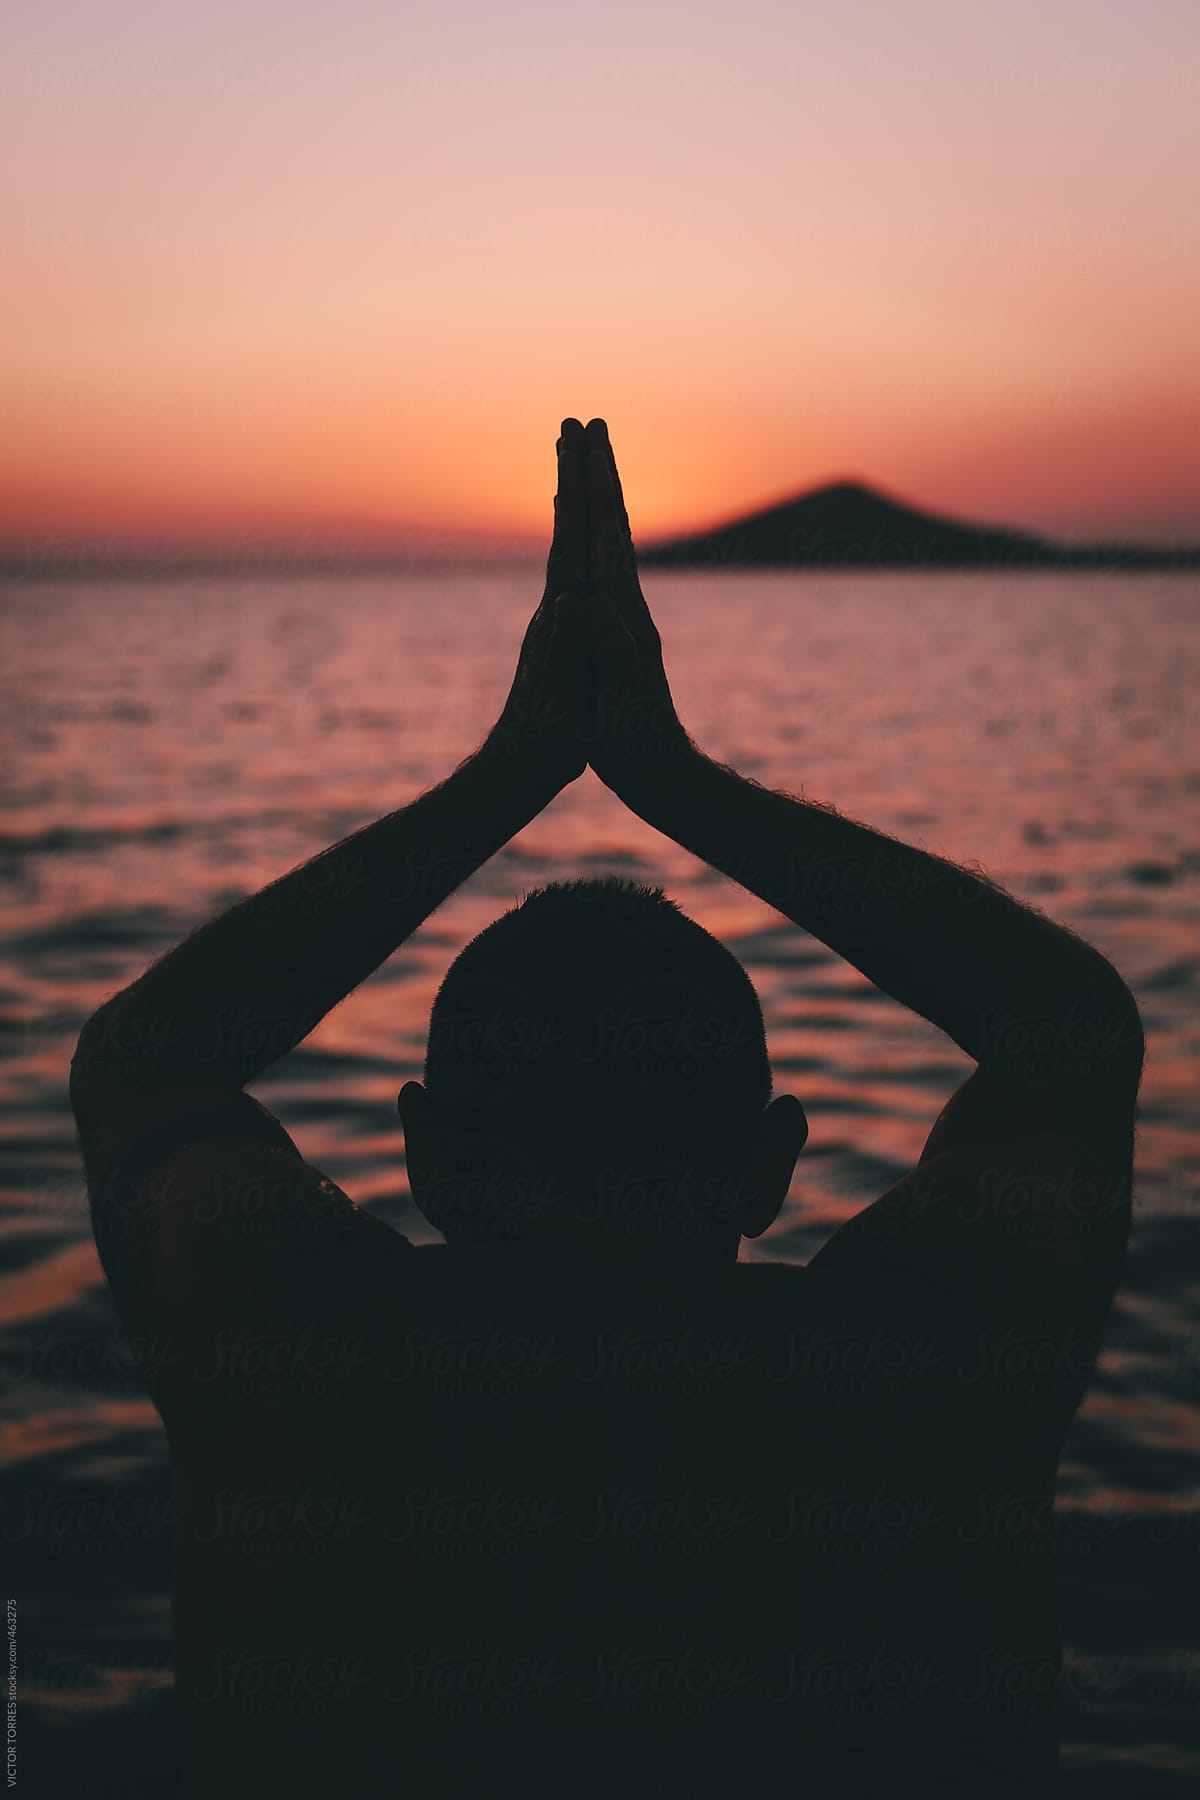 Man Practices Sun Salutation Yoga on the Beach at Sunset